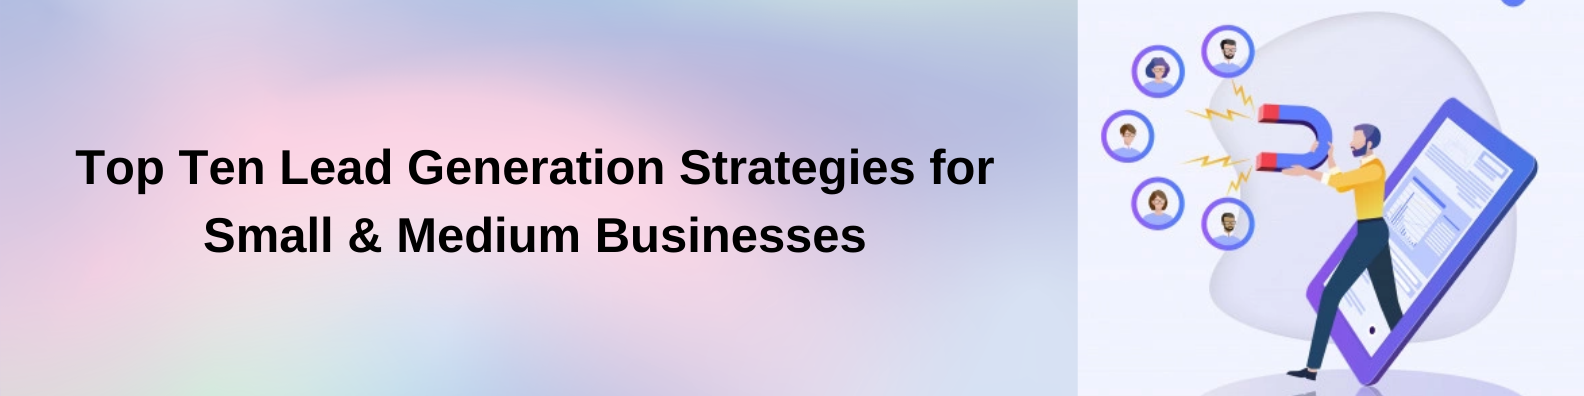 Top Ten Lead Generation Strategies for Small & Medium Businesses